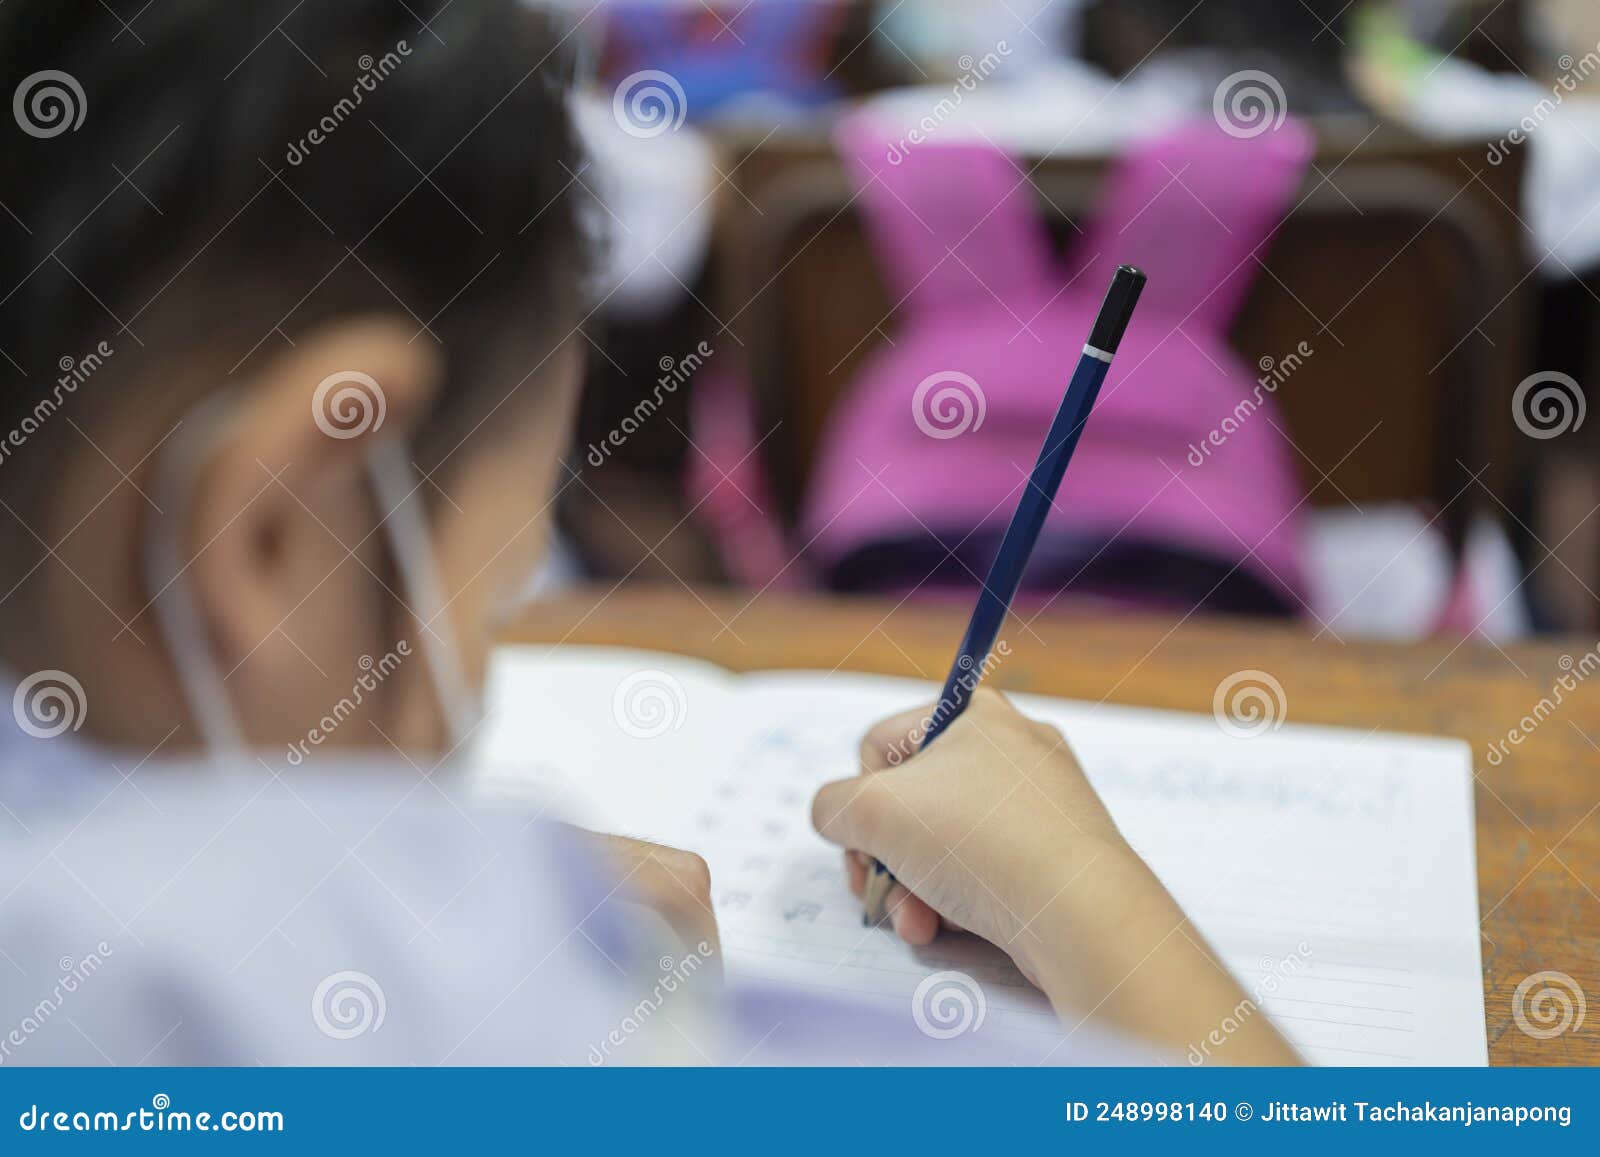 little asian school girl writing notebook homework with pencil